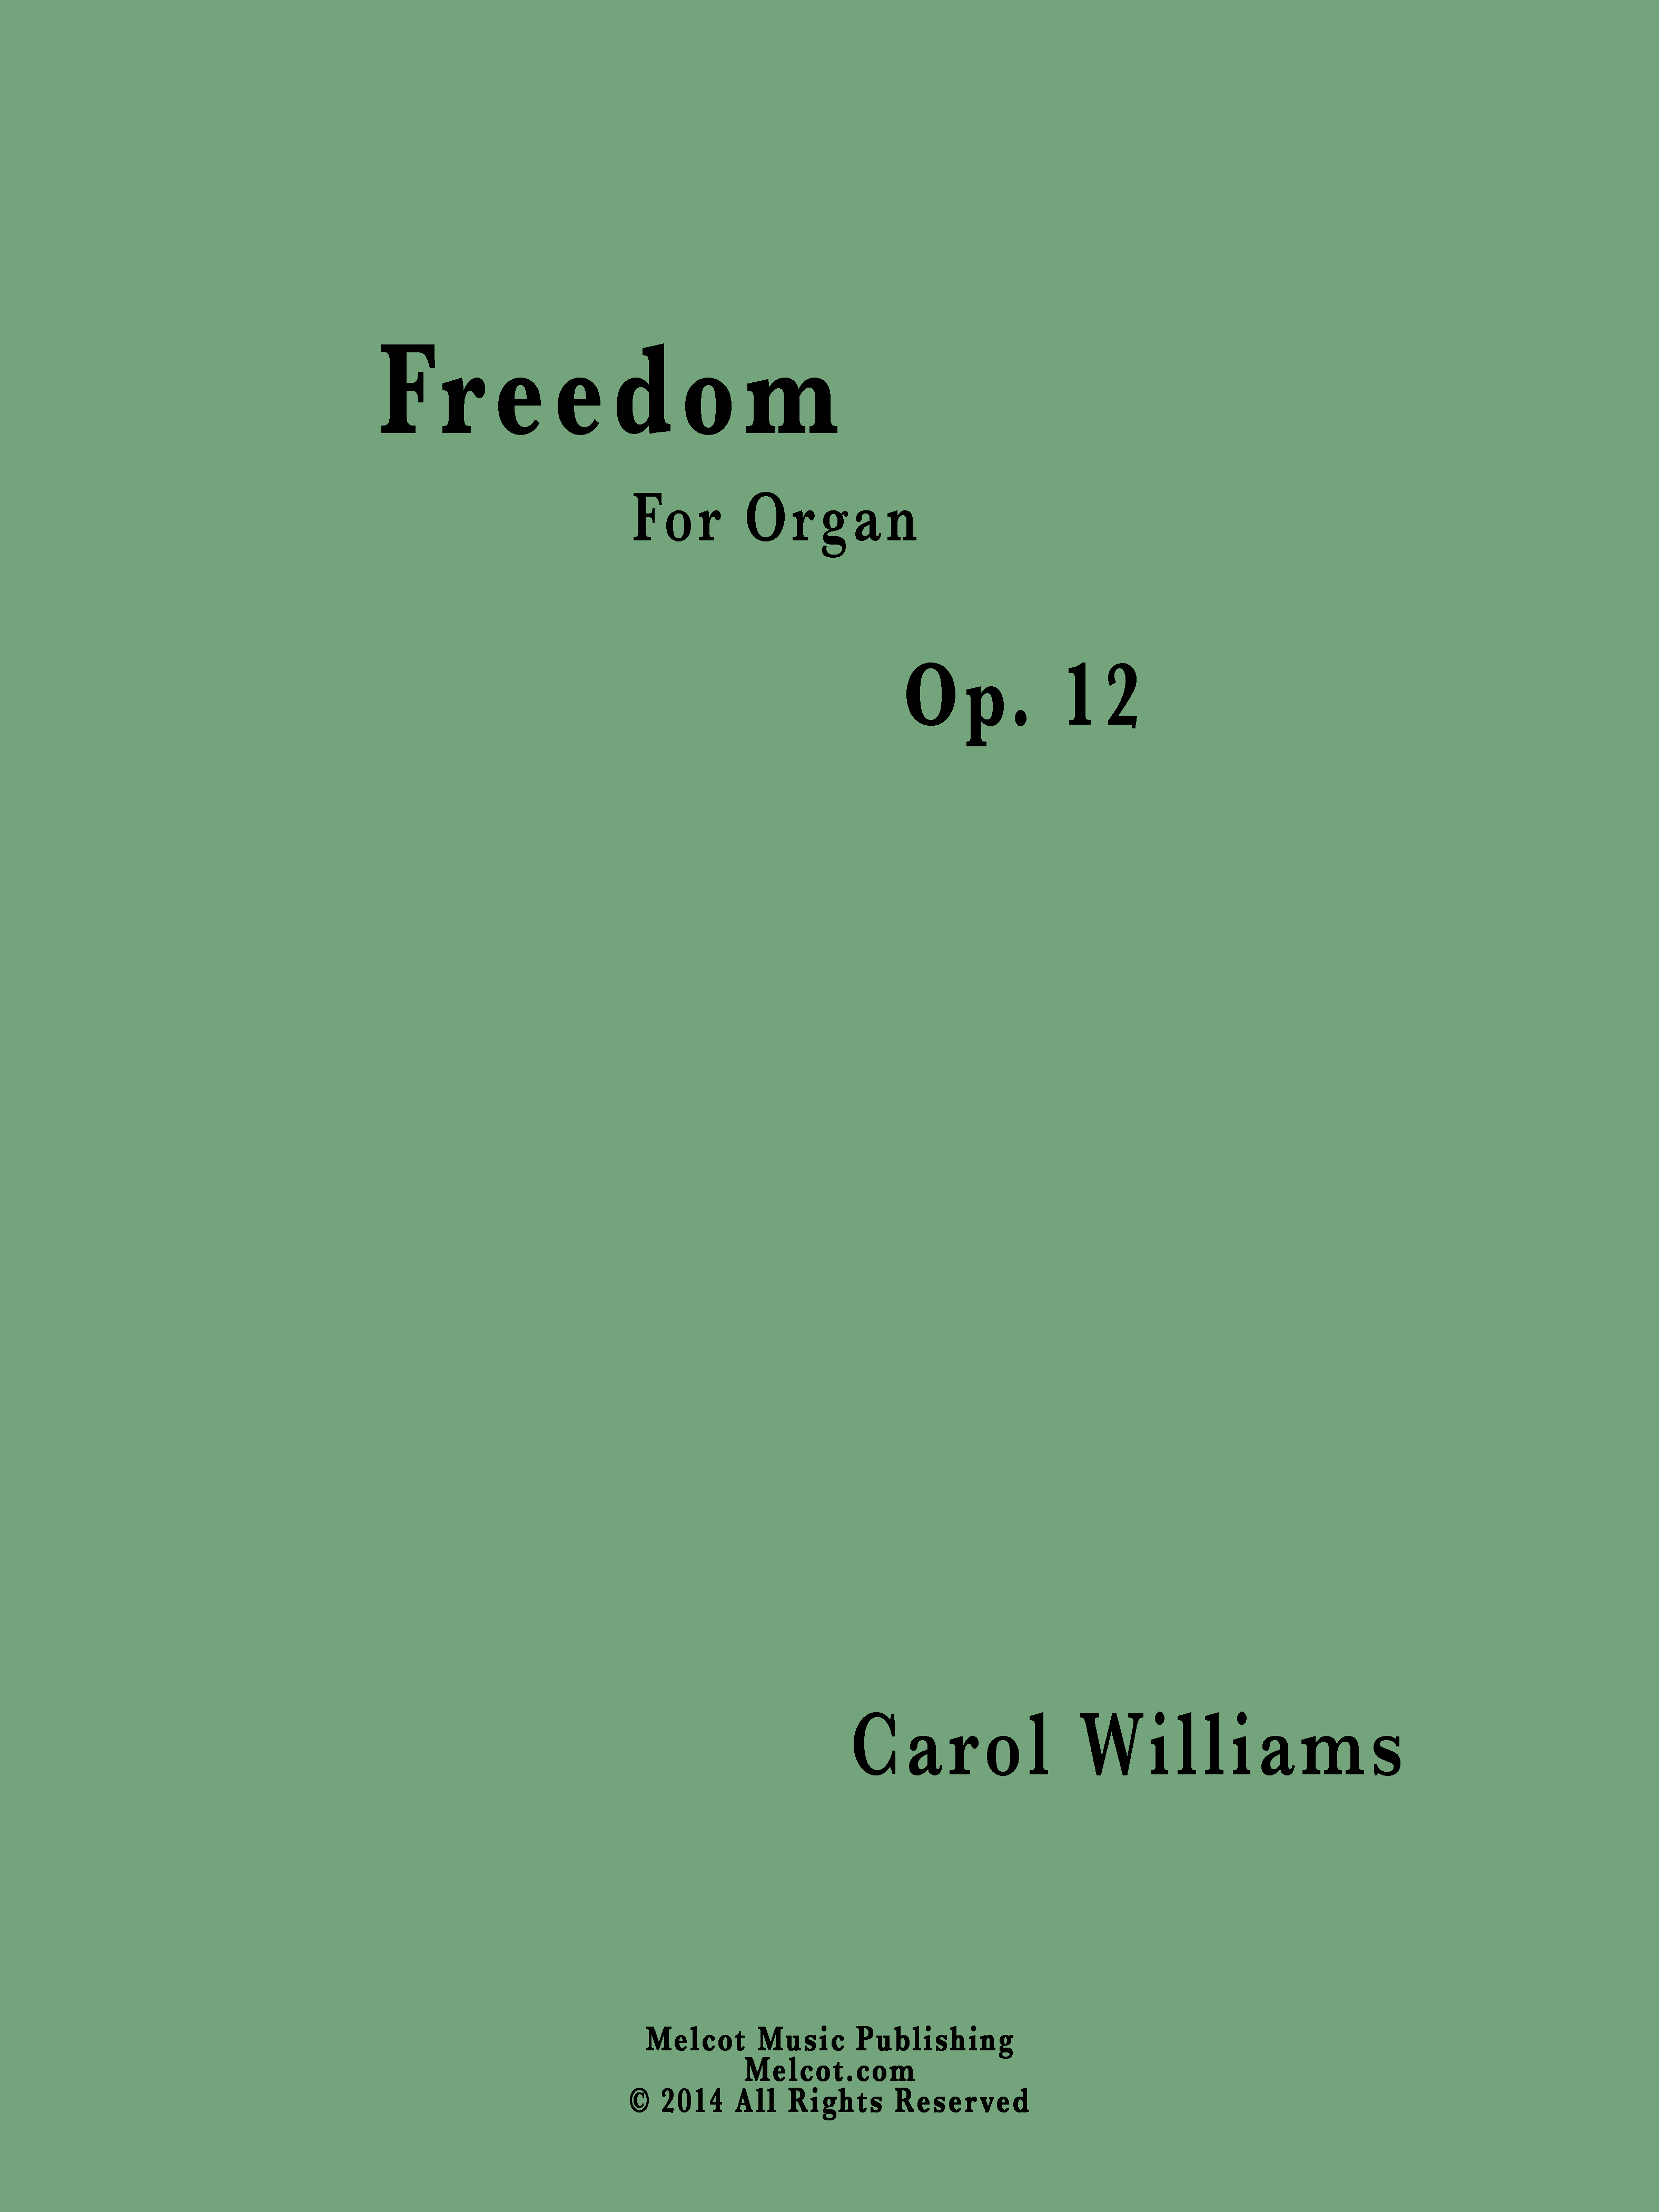 Carol Williams'
                            Freedom composition